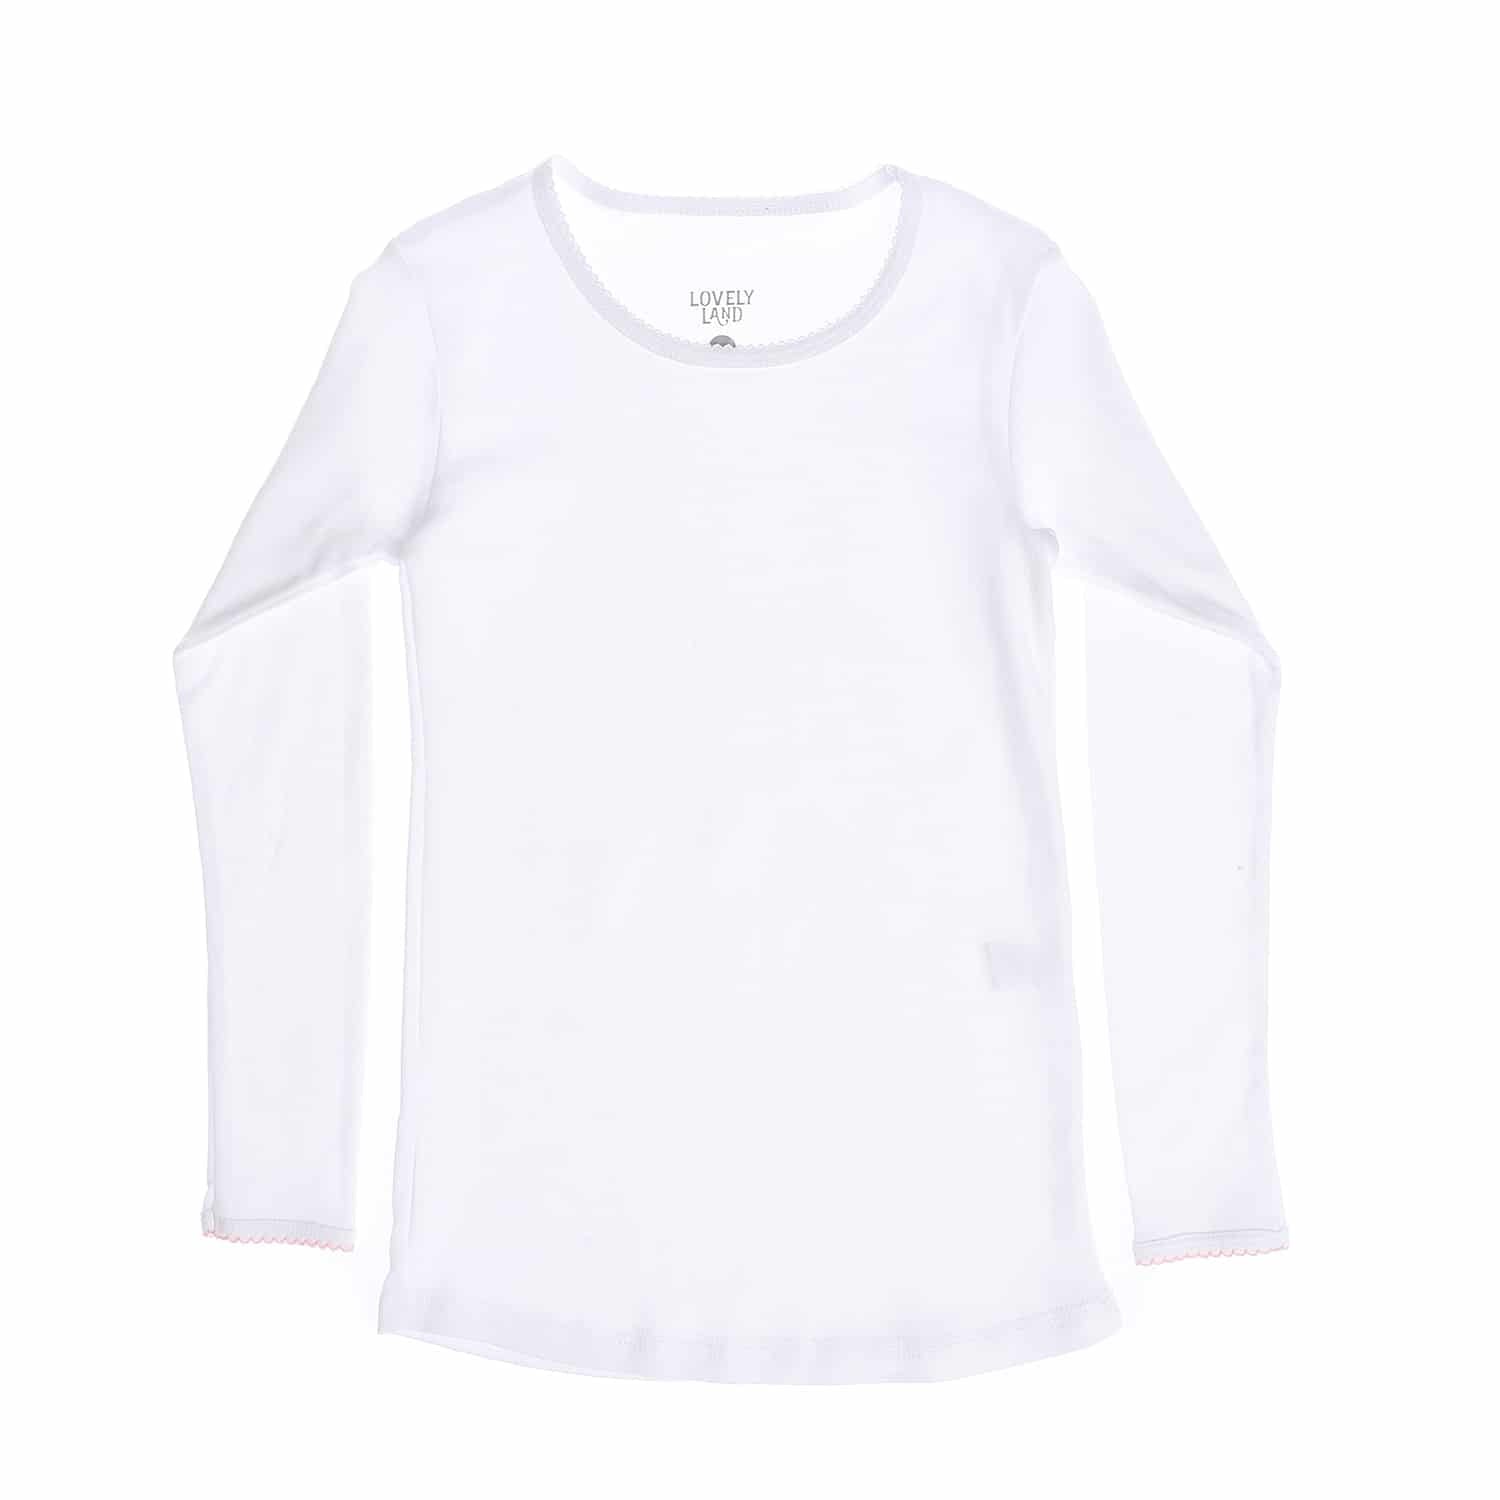 Girls Sleeved White Undershirts - Pack Of 2